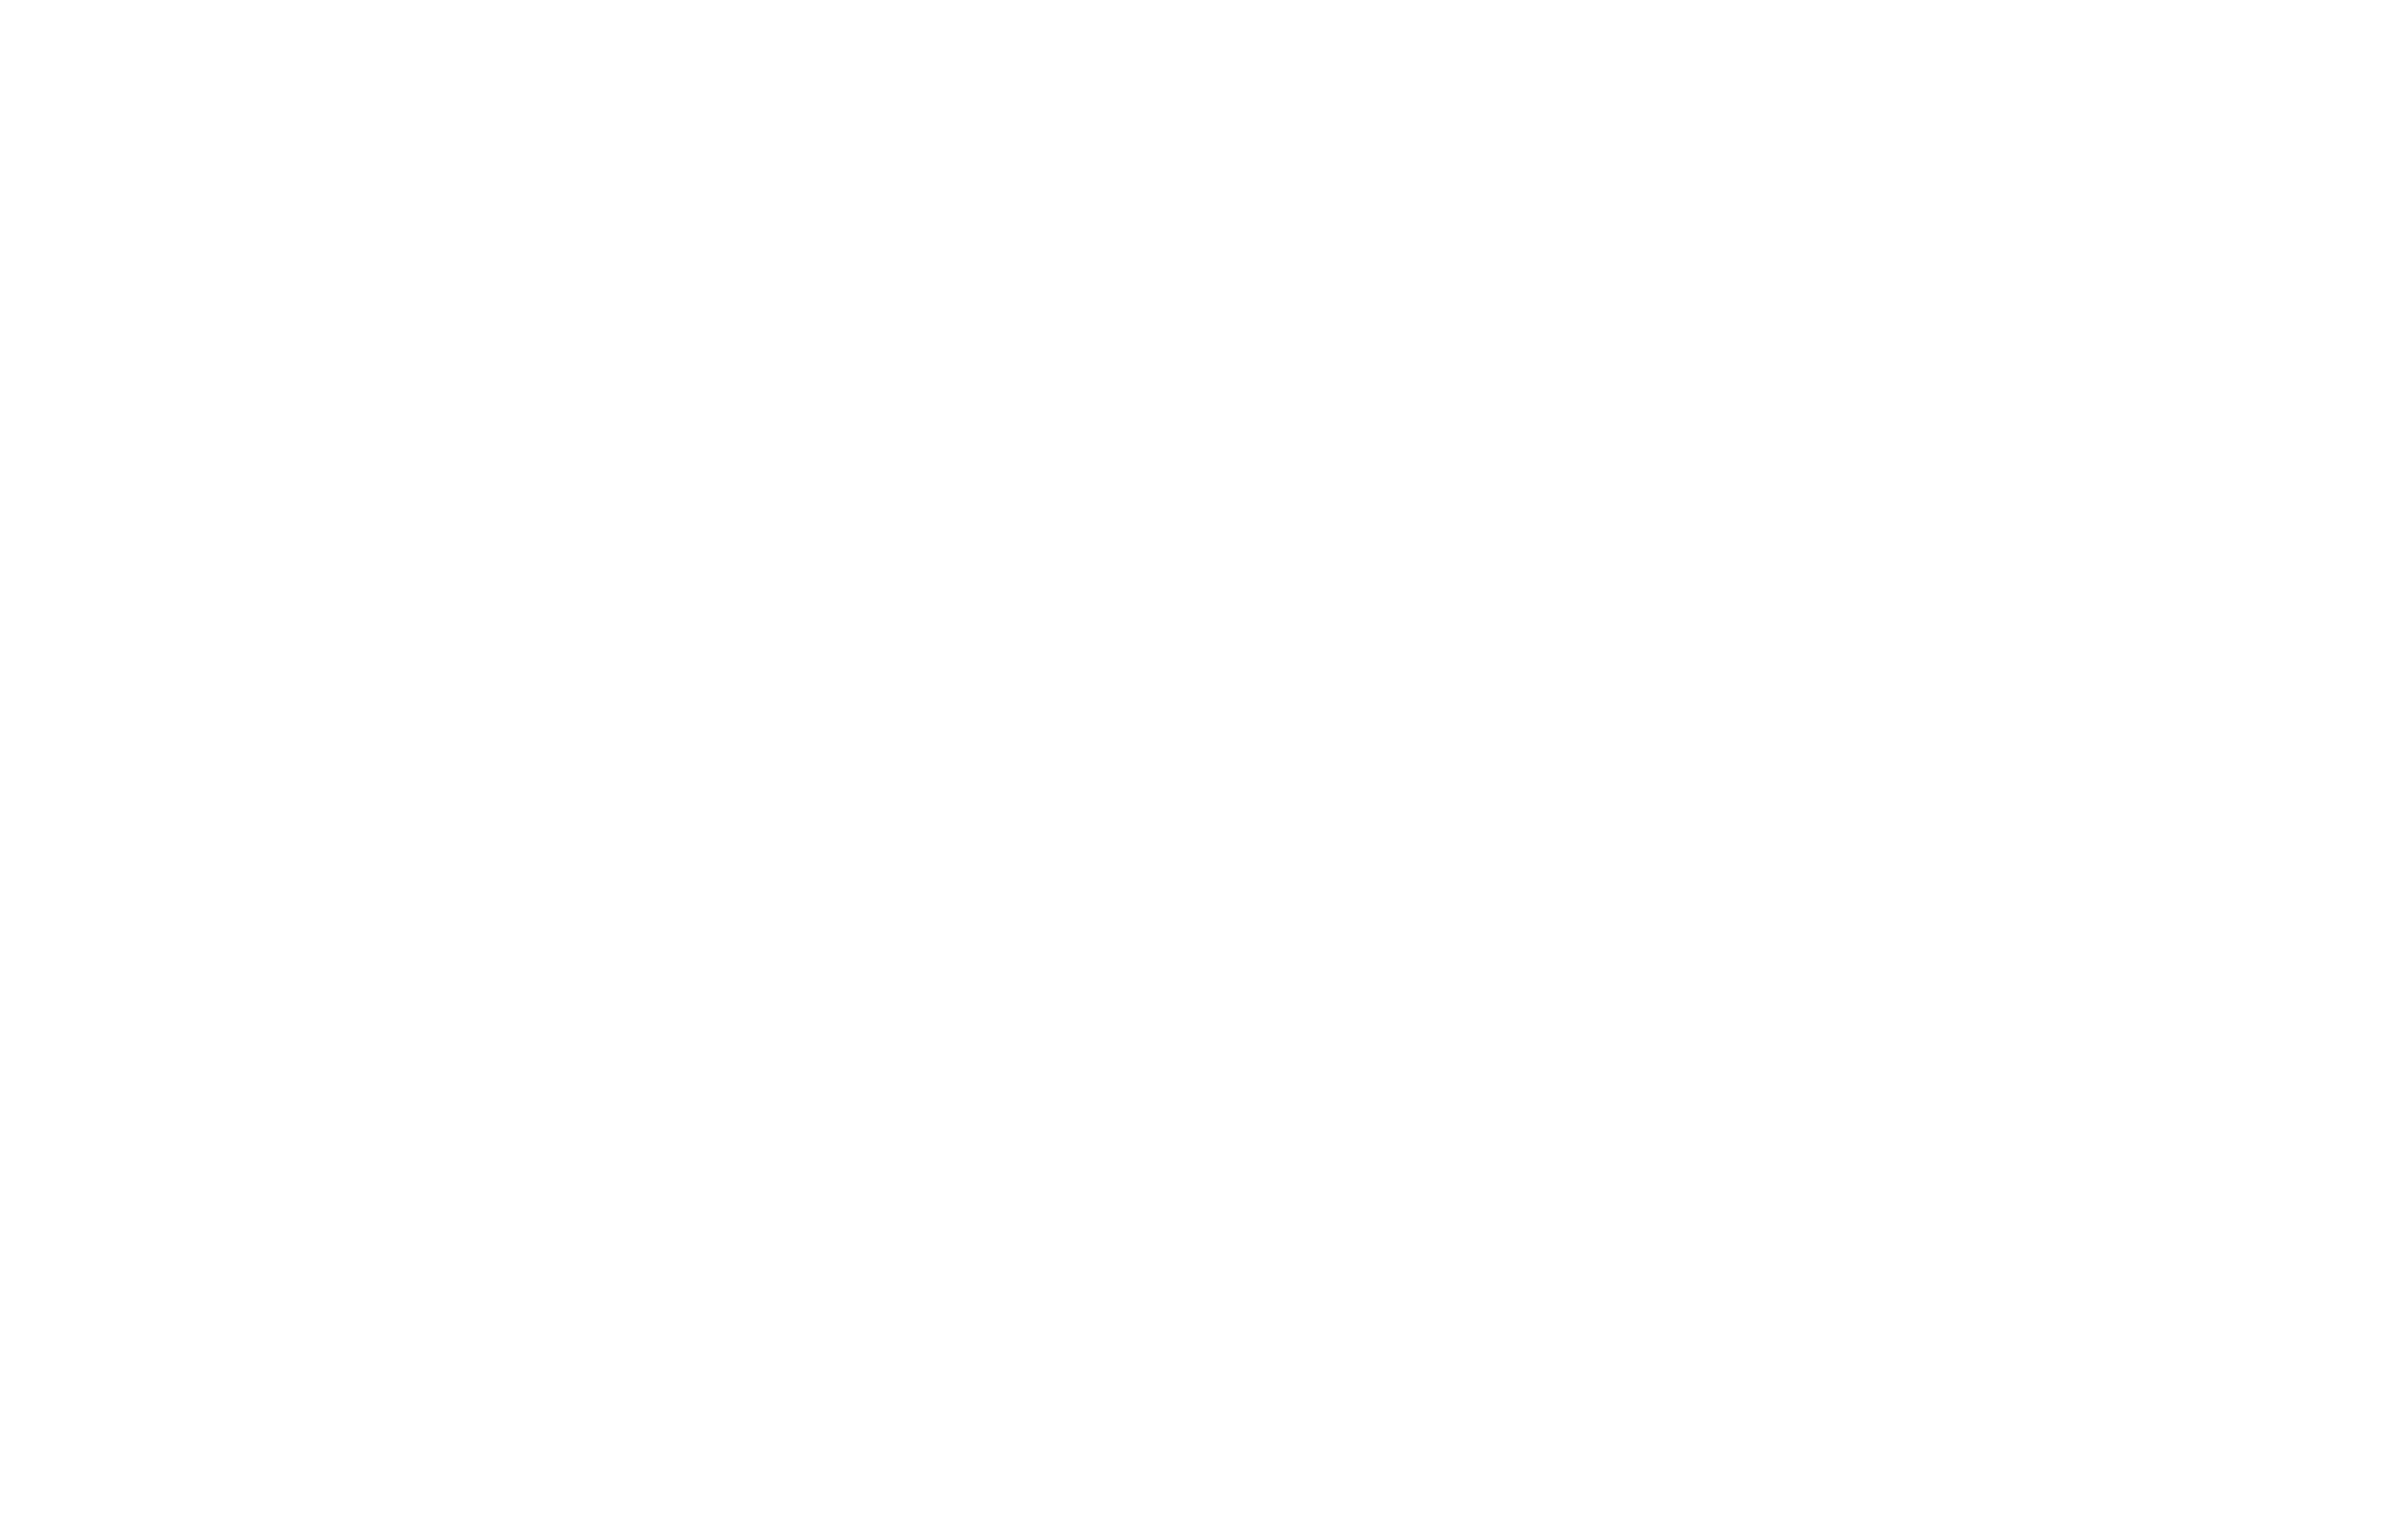 Aida Clinic